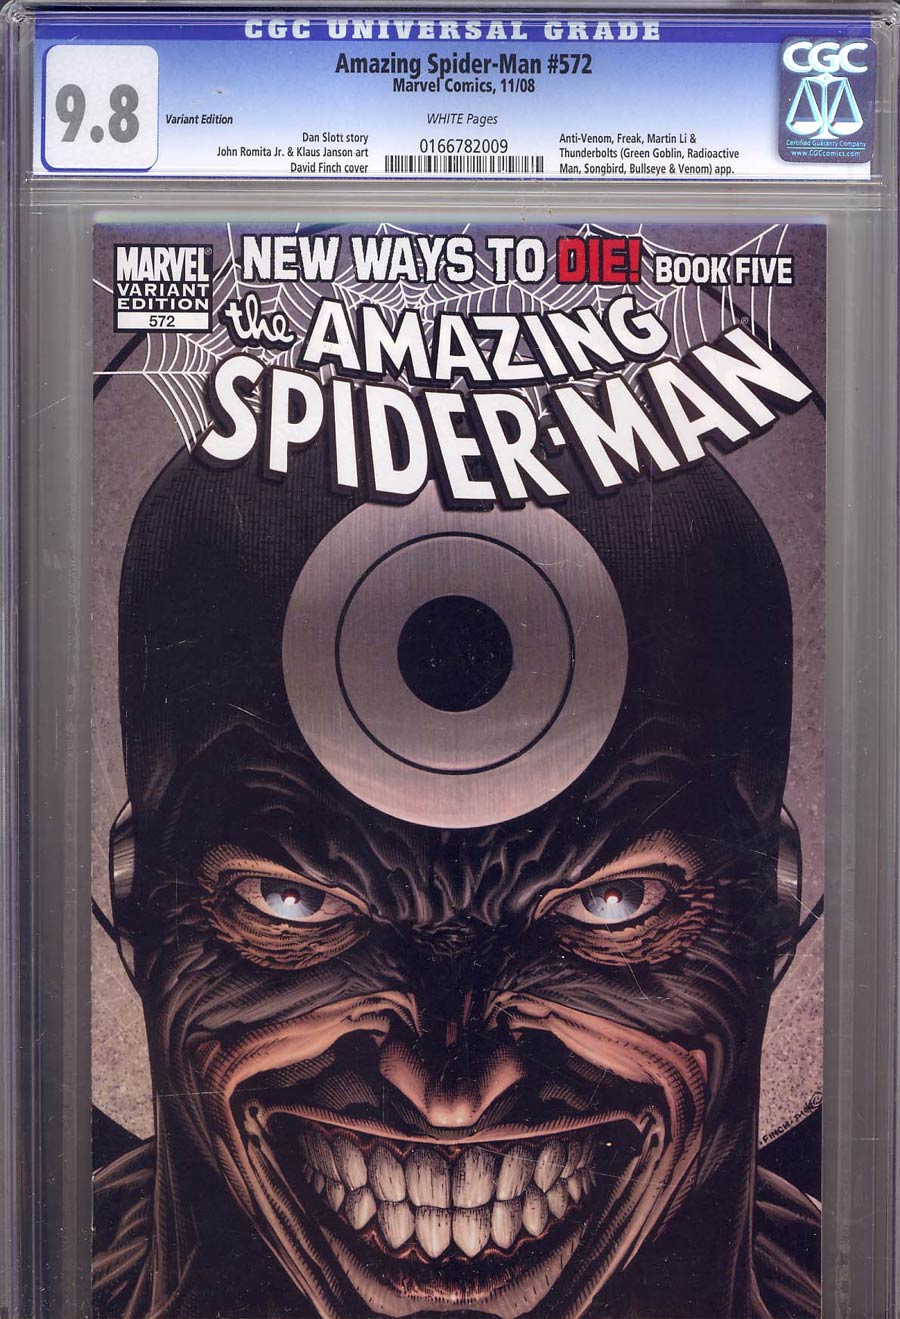 Amazing Spider-Man Vol 2 #572 CGC 9.8 1st Ptg Variant David Finch Bullseye Cover